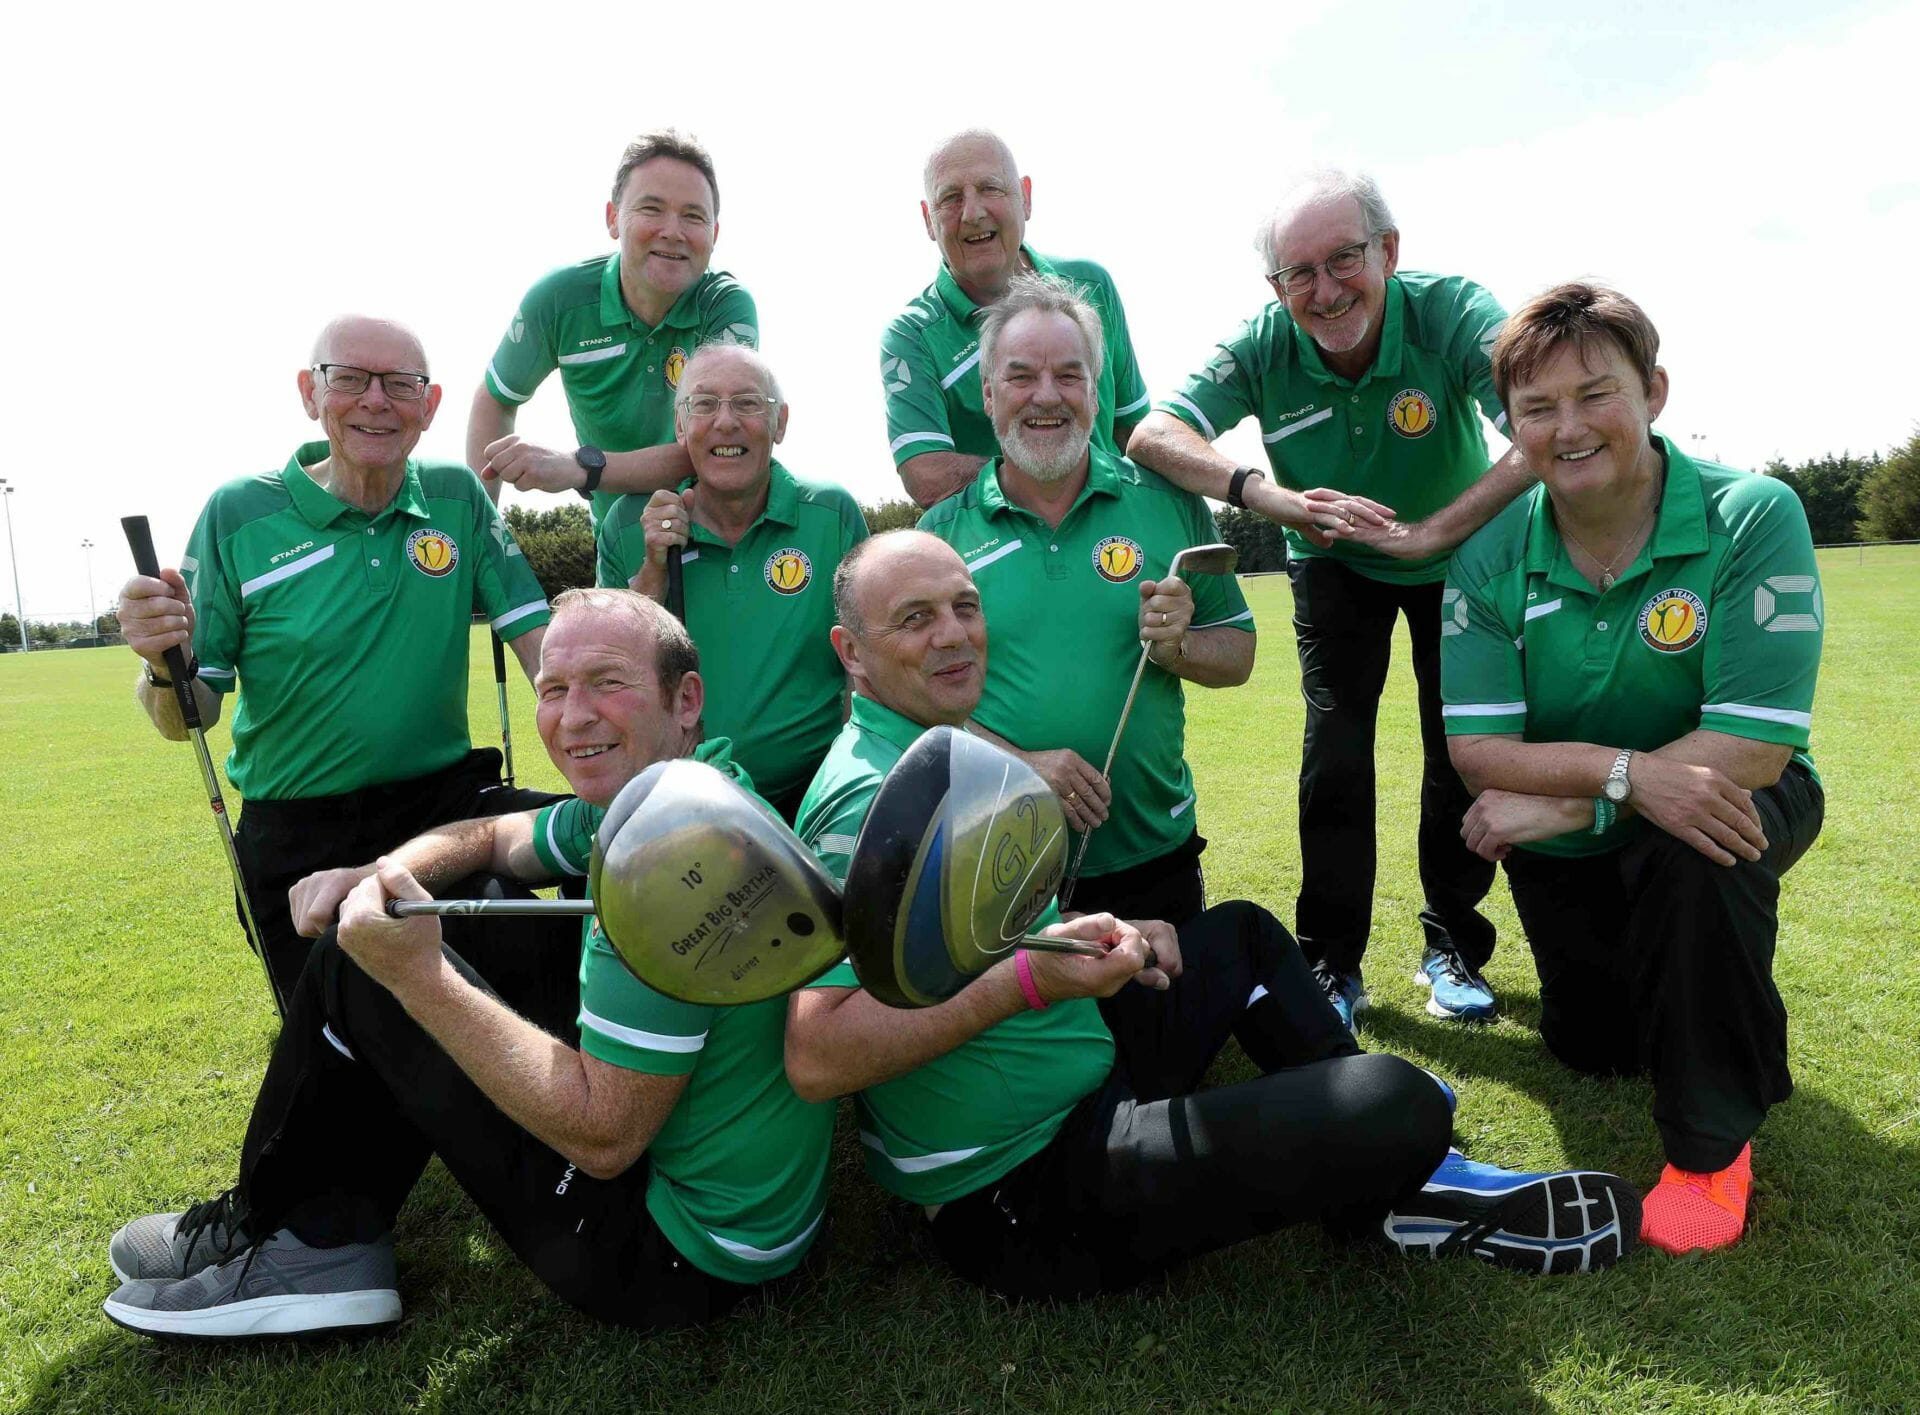 Irish golfers gearing up for World Transplant Games